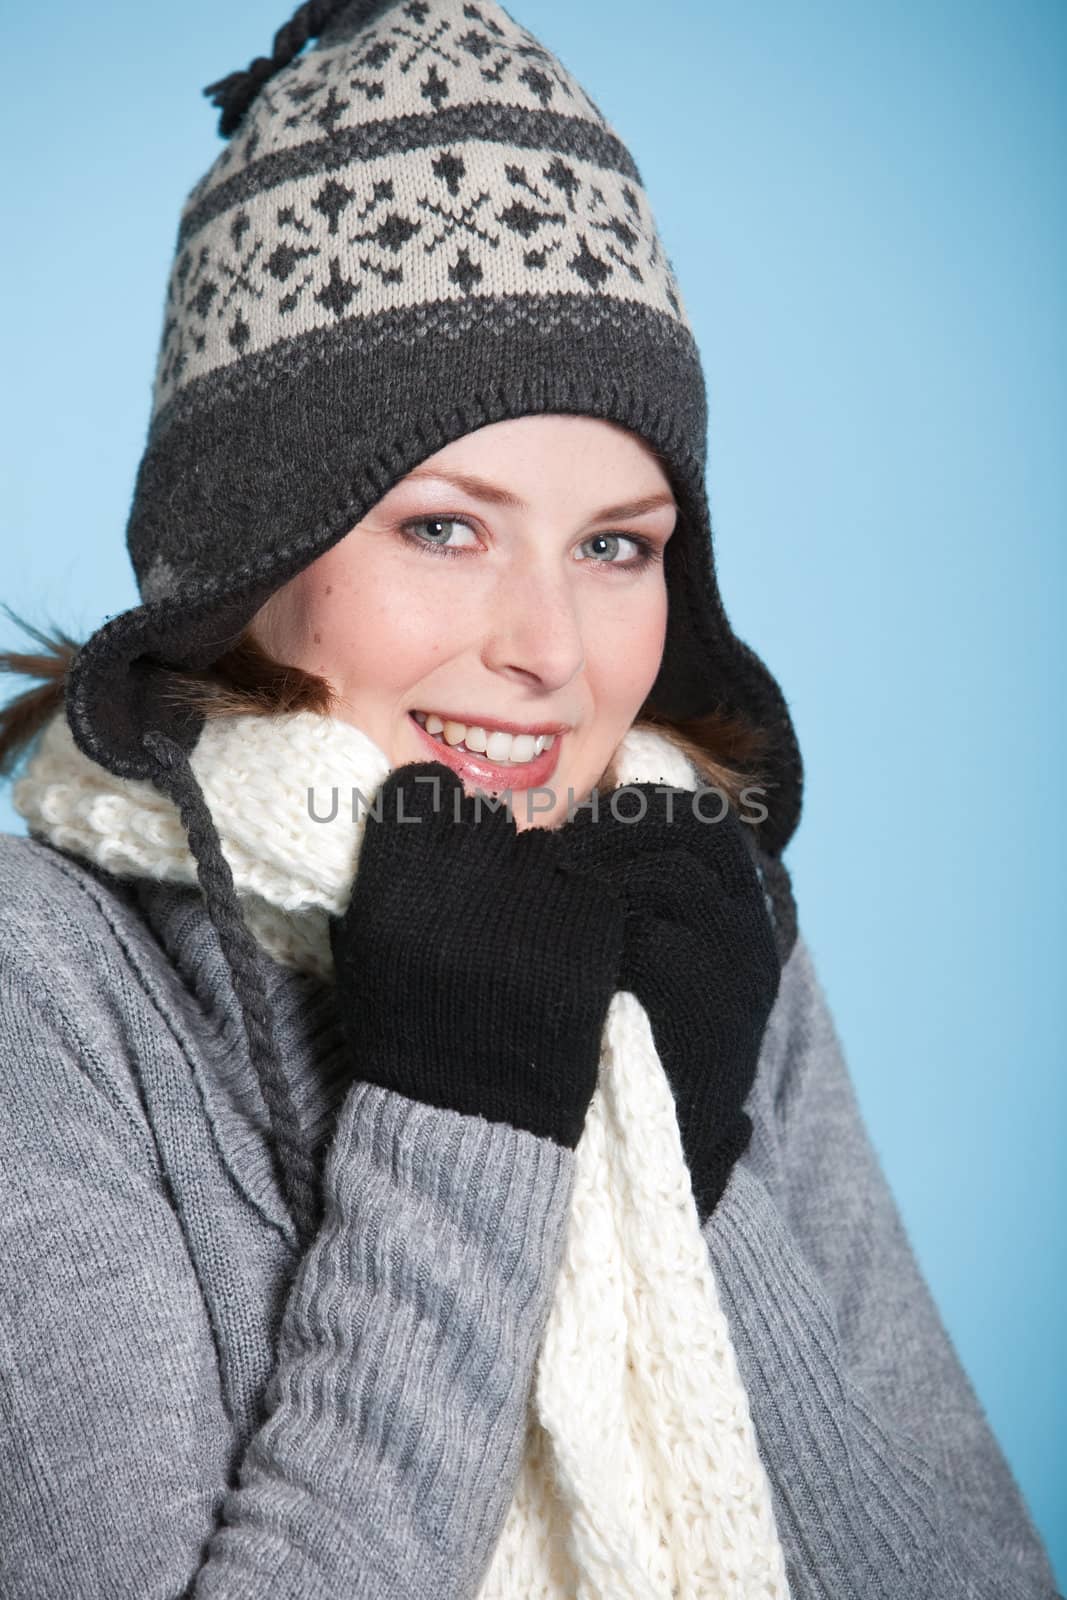 Dressing warm for winter by Fotosmurf